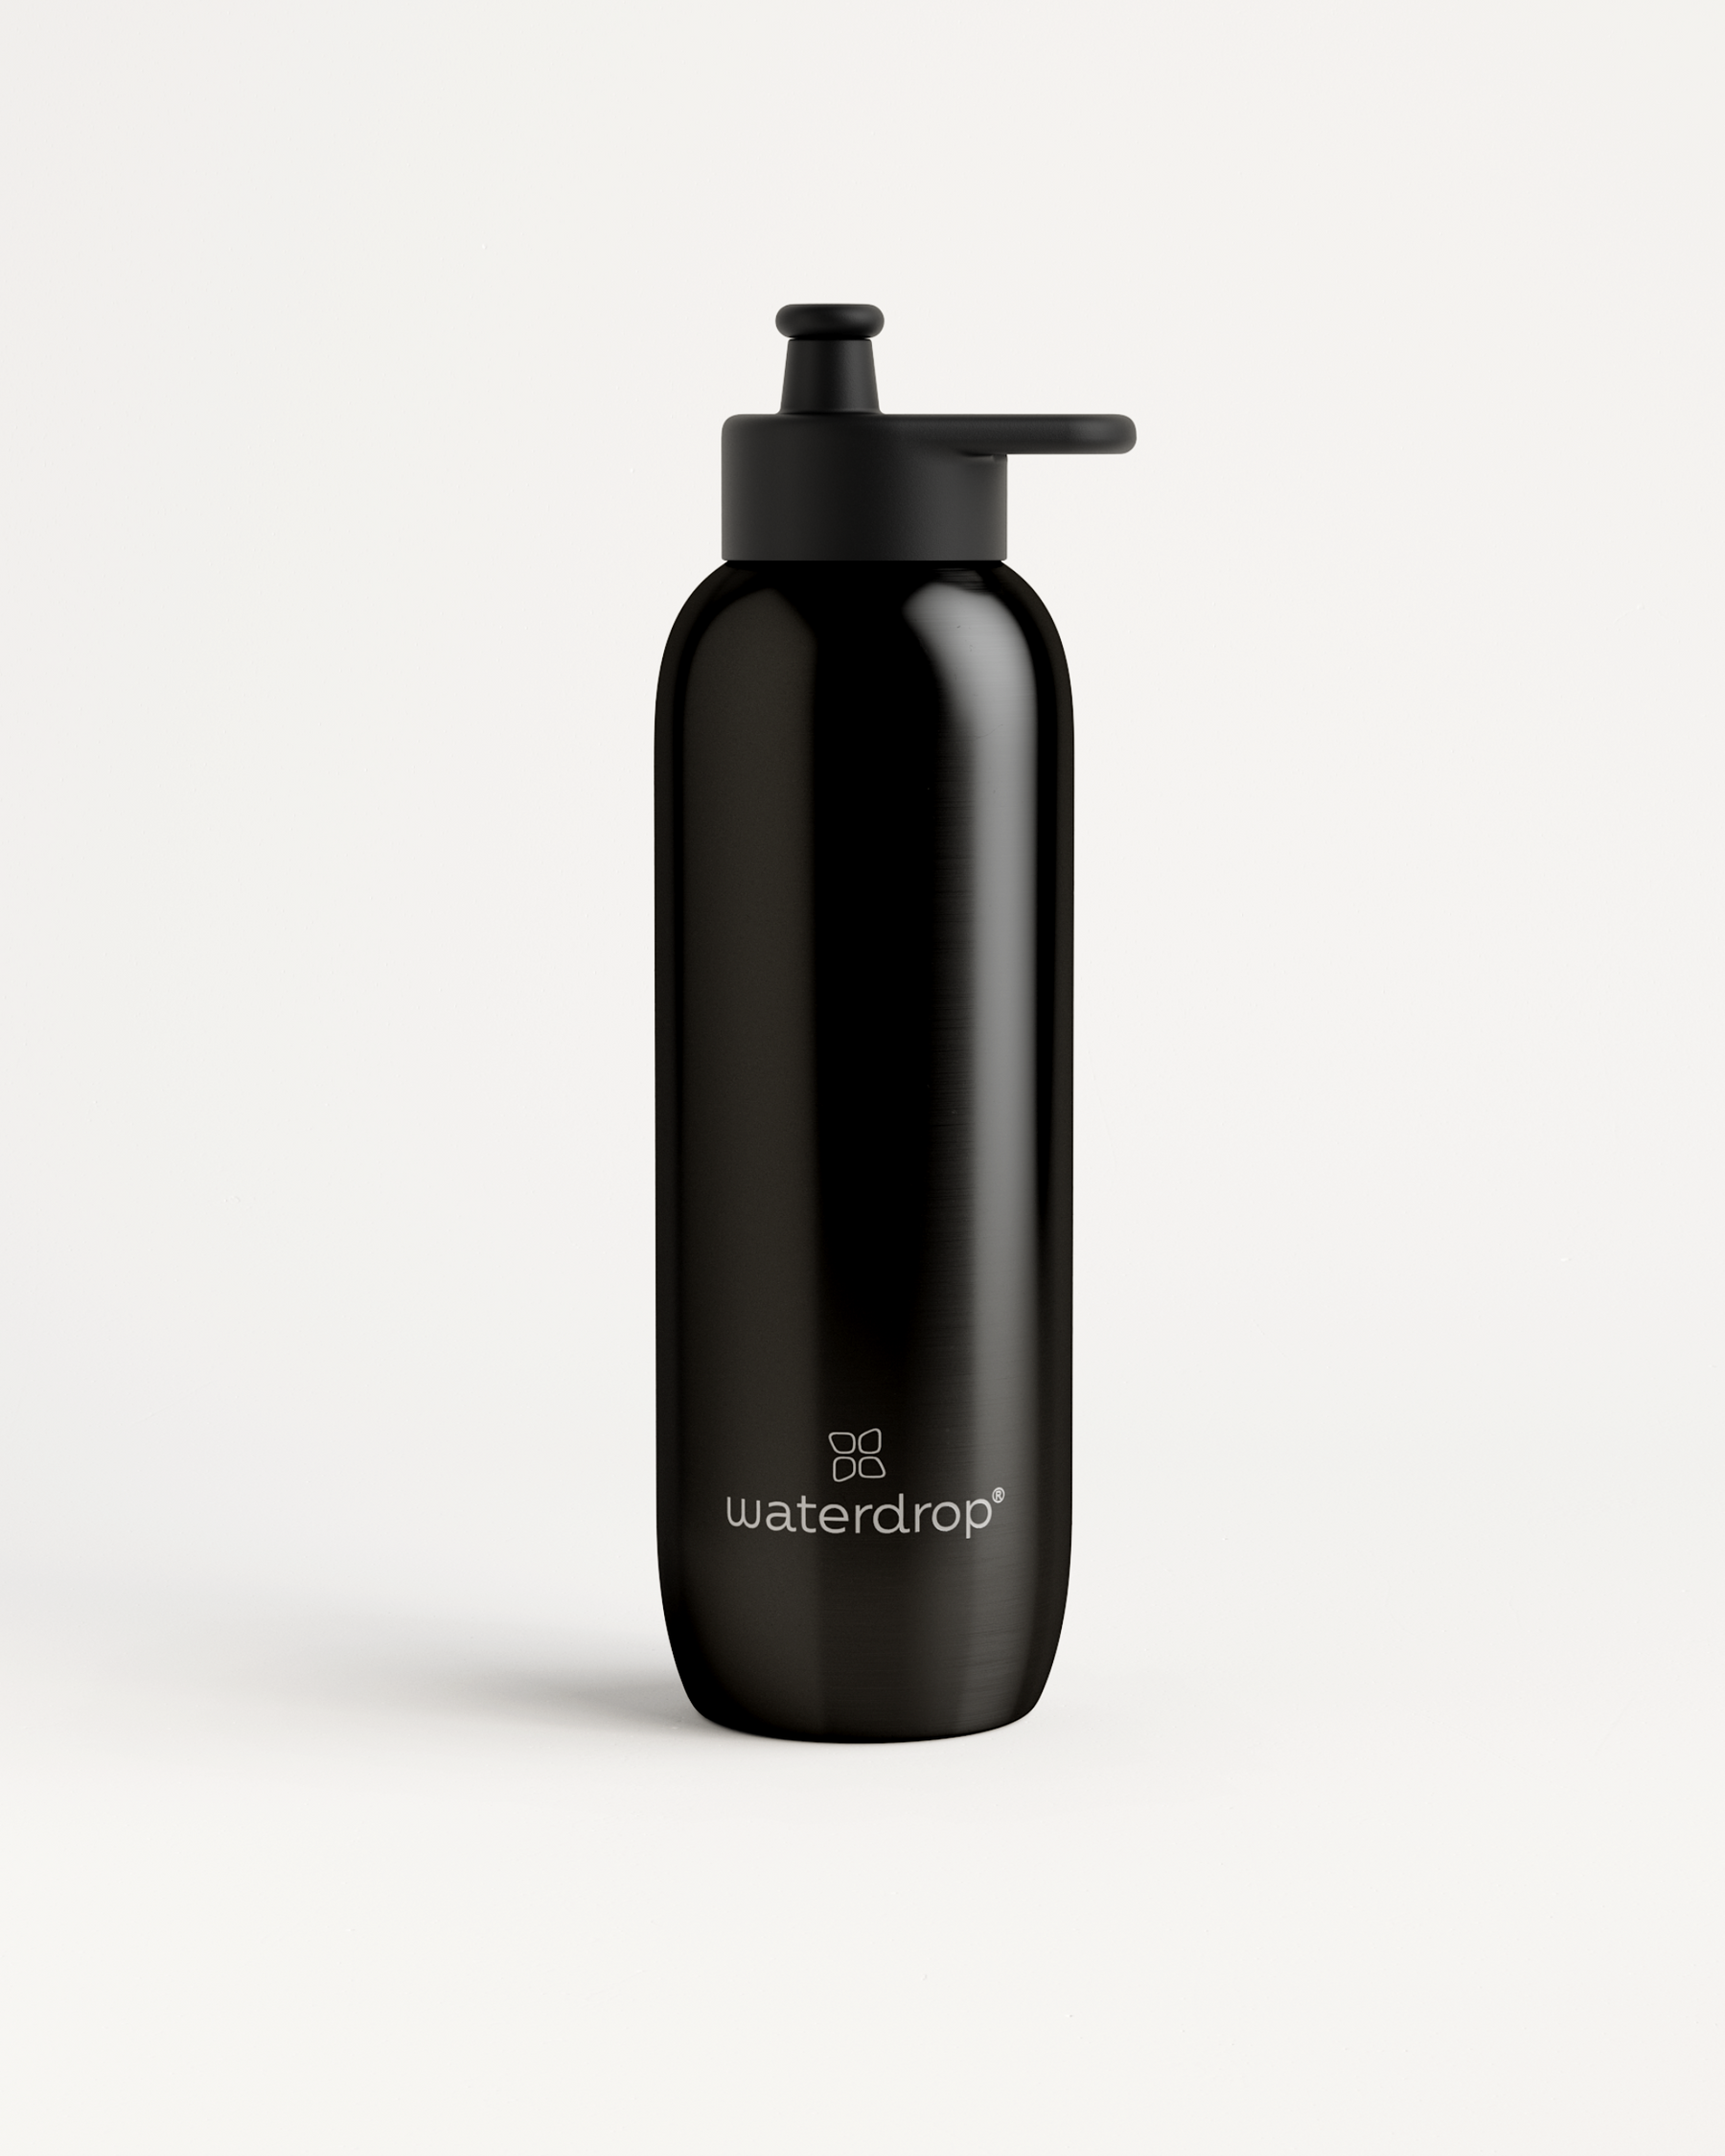 $48 Brand new! 😍 I love my Lululemon water bottle!, Gallery posted by  Lemonkitkat